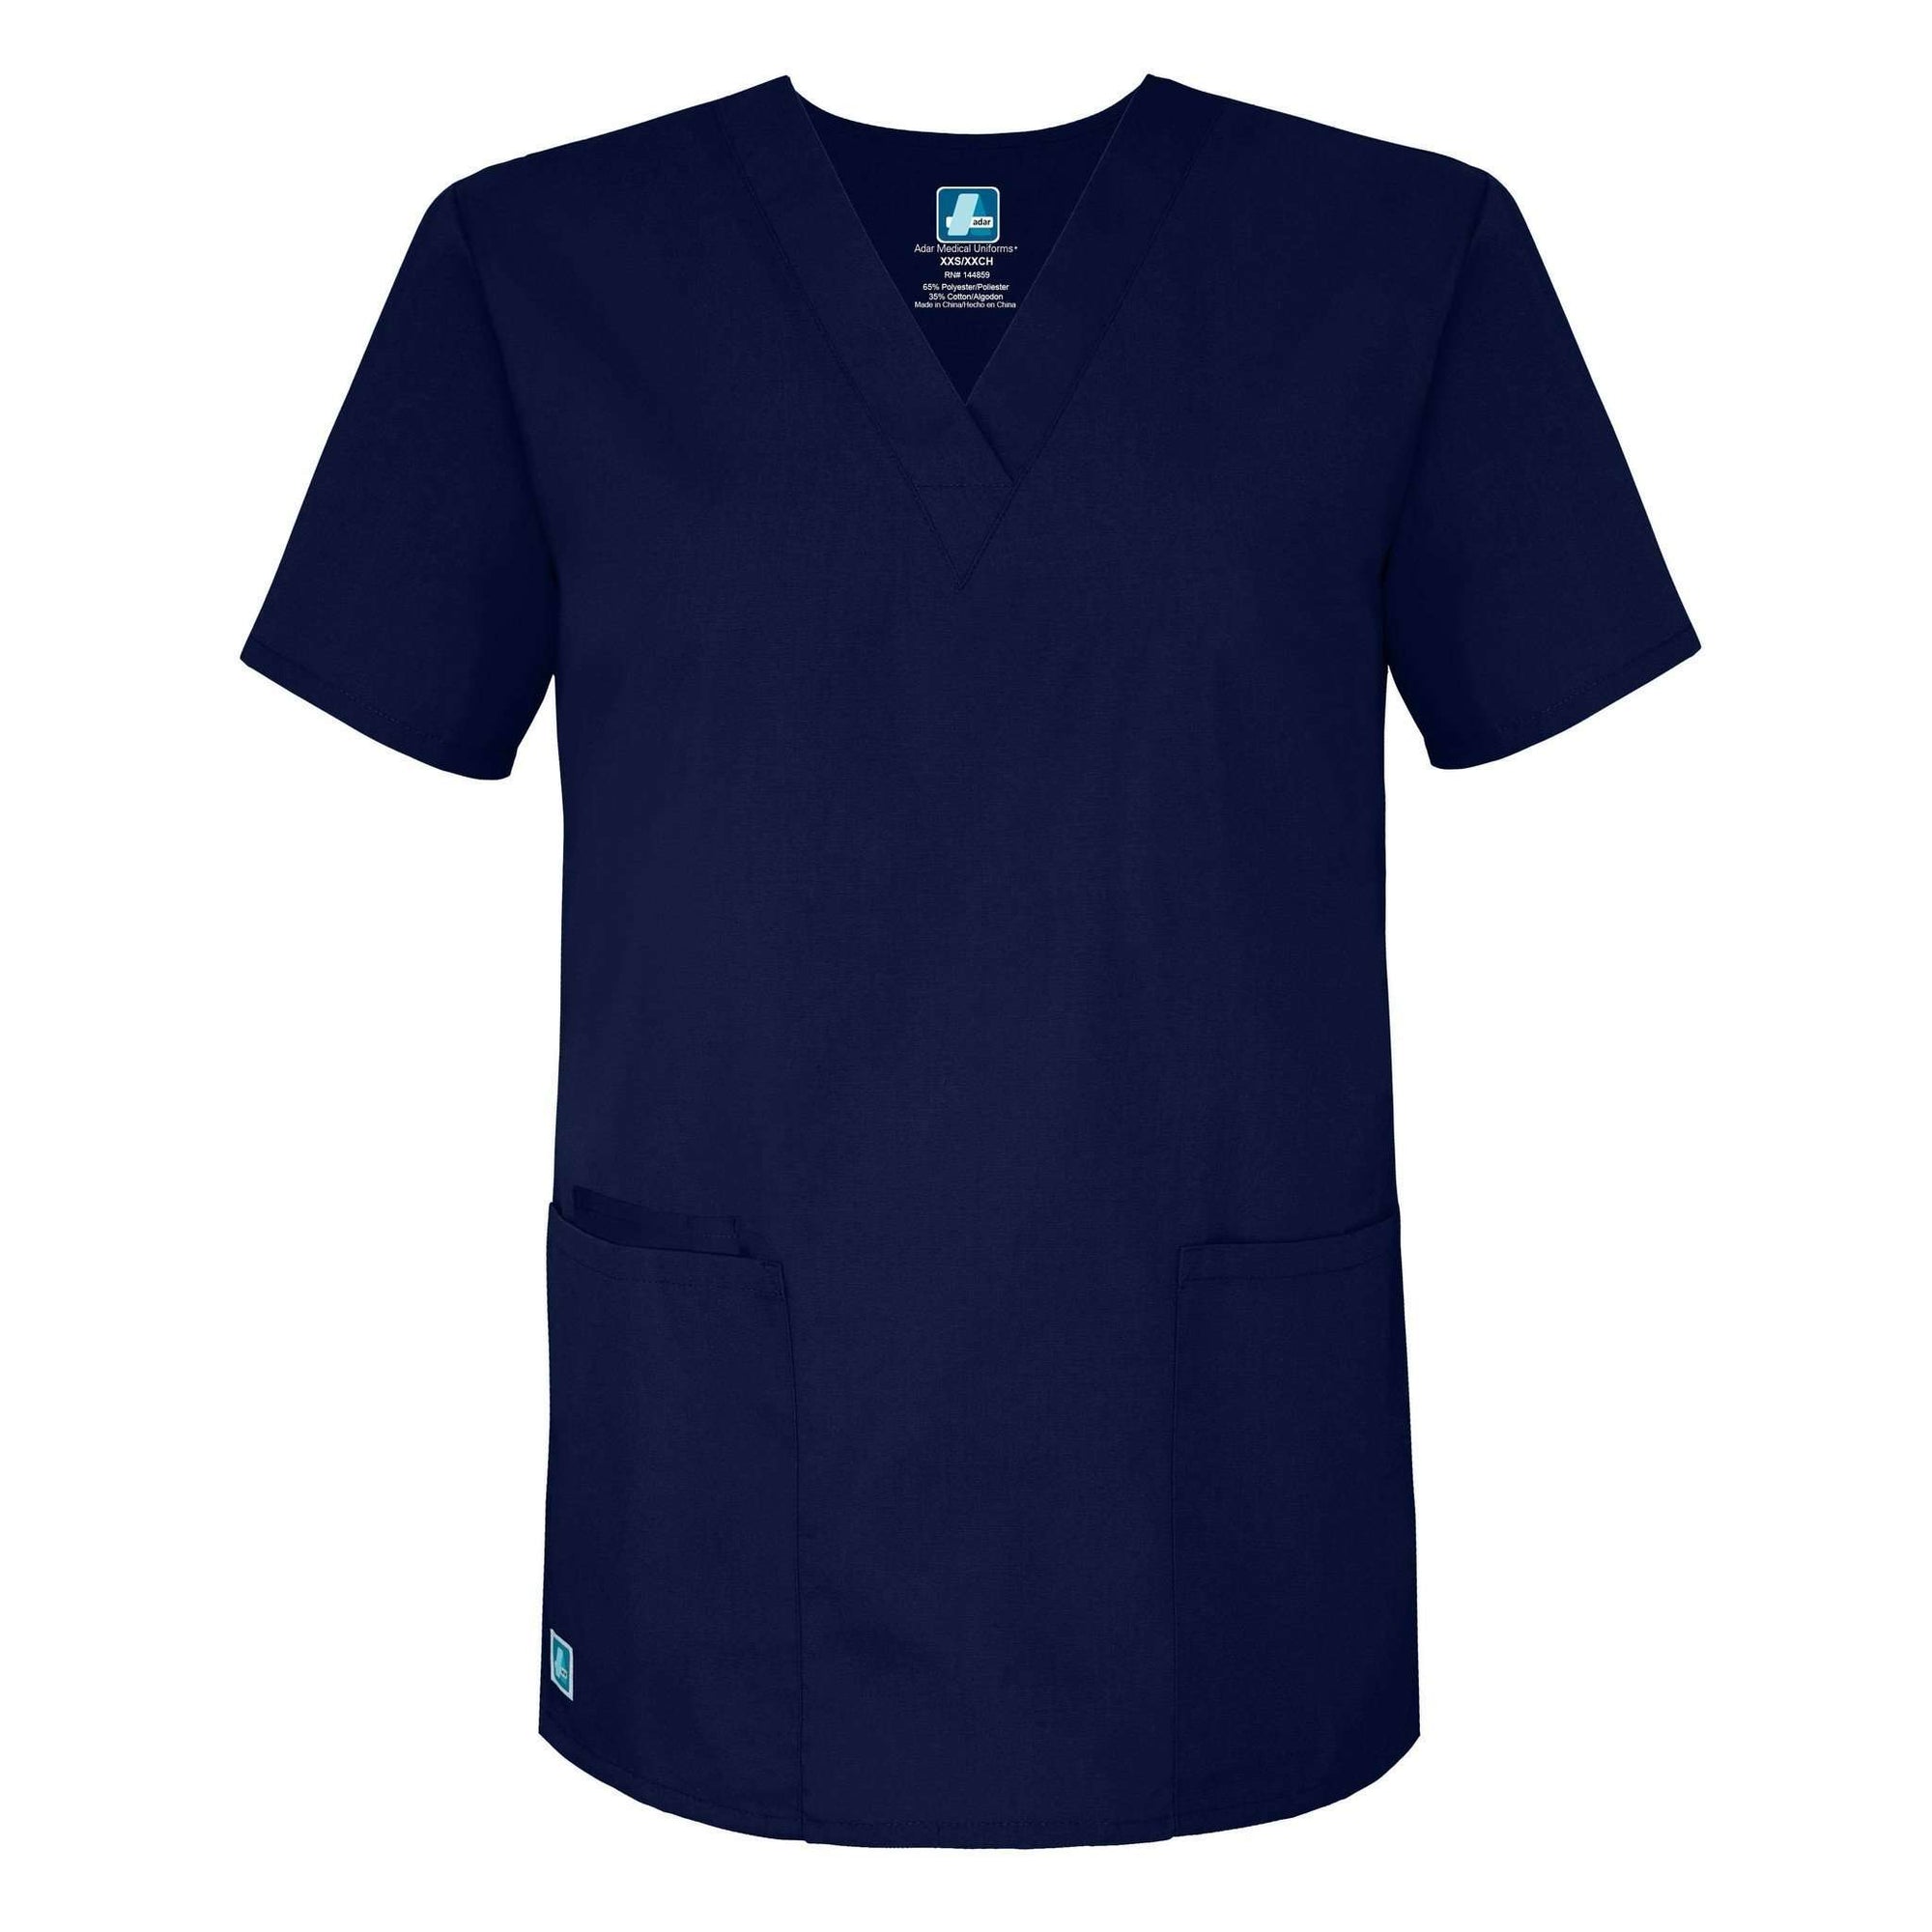  Adar - uniforms Medical Uniform Tops uniforms online Adar Universal Unisex V-Neck 2 Pocket Scrub Top Navy - SchoolUniforms.com